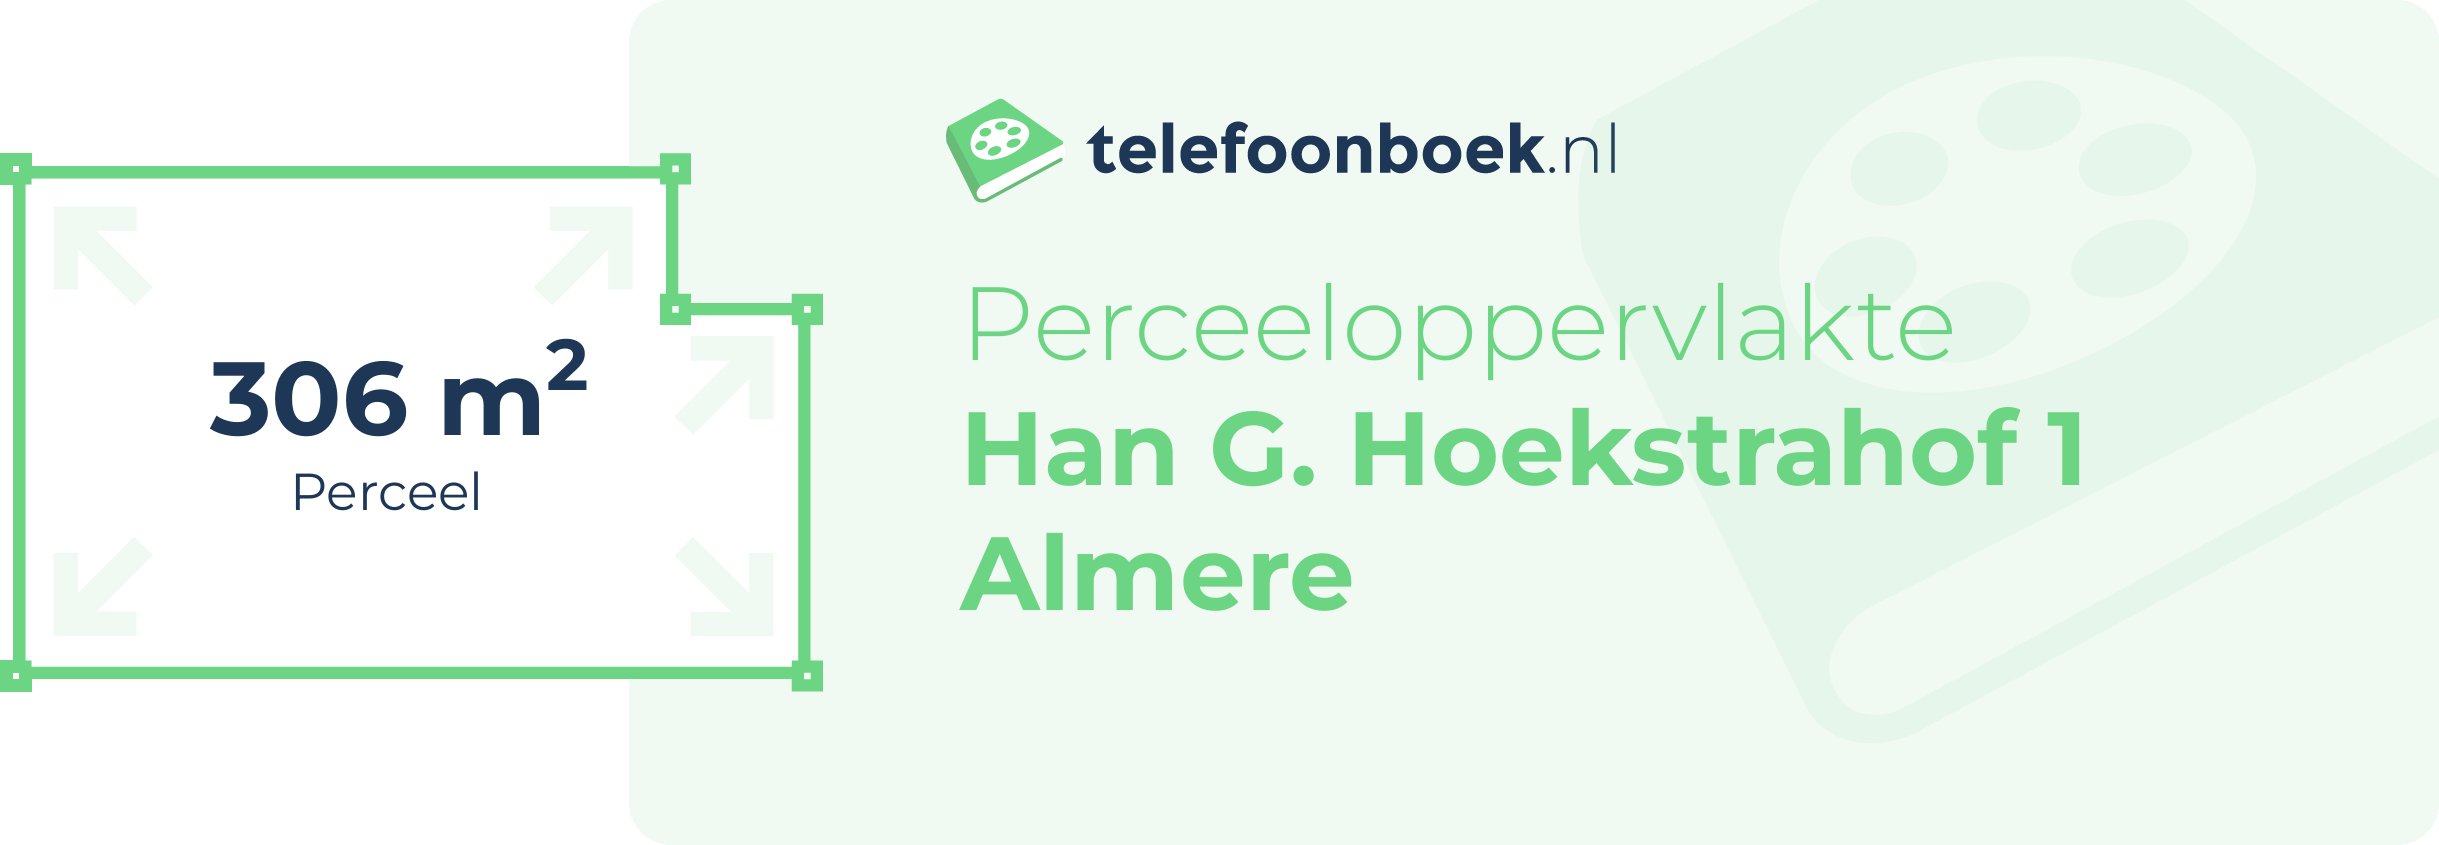 Perceeloppervlakte Han G. Hoekstrahof 1 Almere